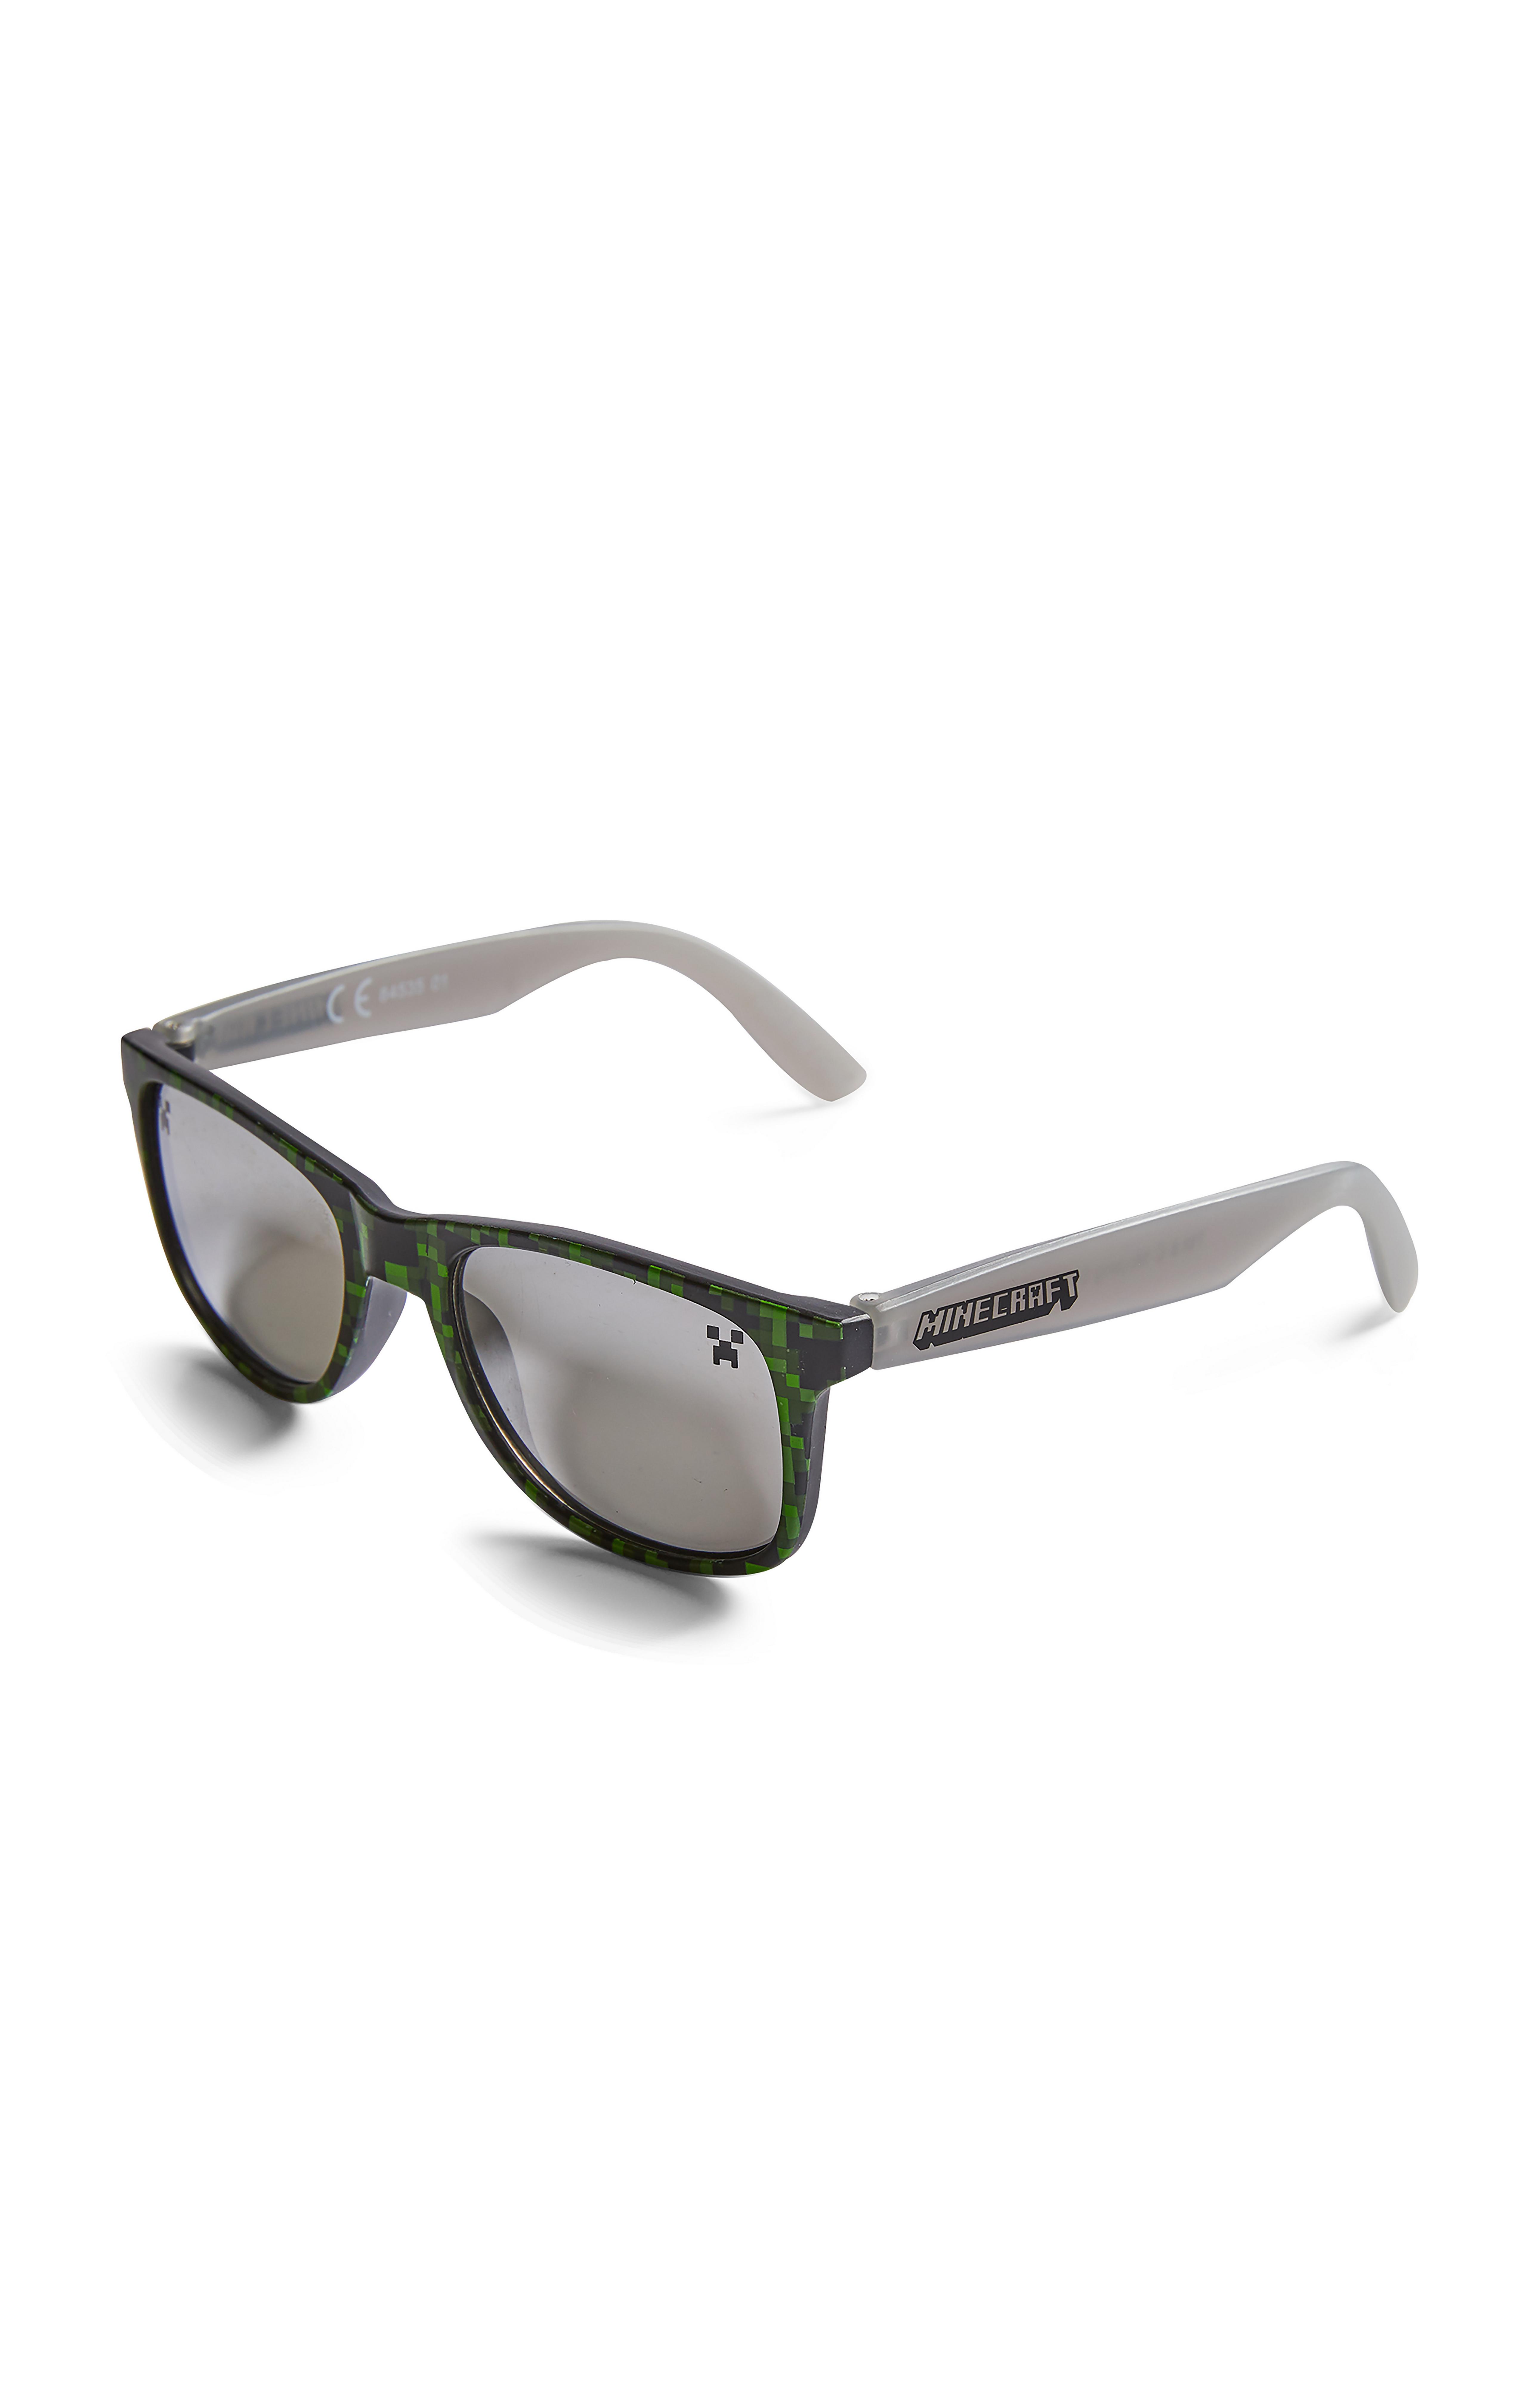 Grey Minecraft Sunglasses Kids Accessories Kids Clothes All Primark Products Primark Uk